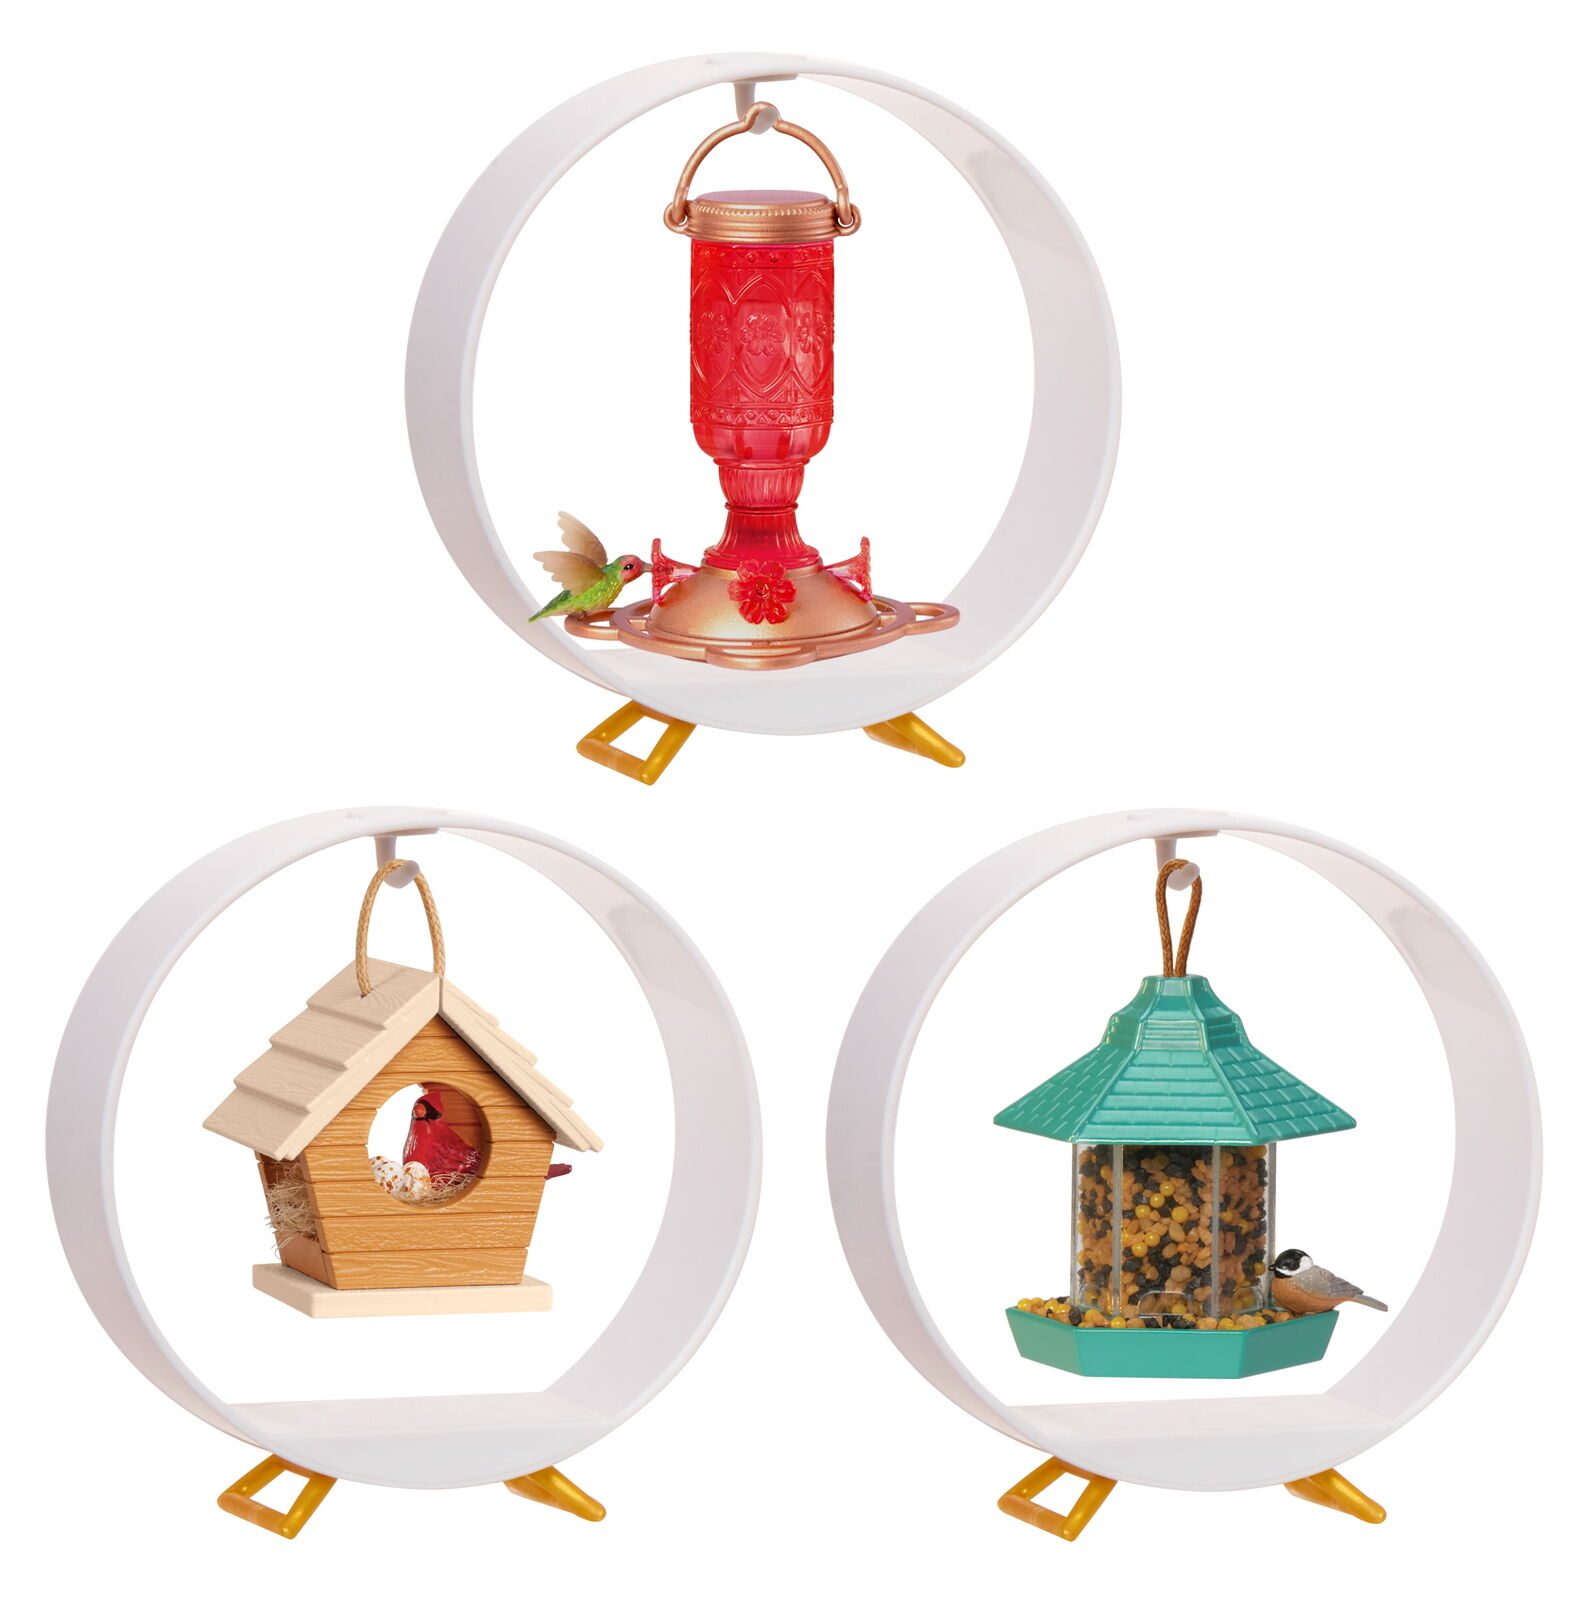 Make It Mini Lifestyle Home Series 1 Birdfeeders Bundle (3 Pack)